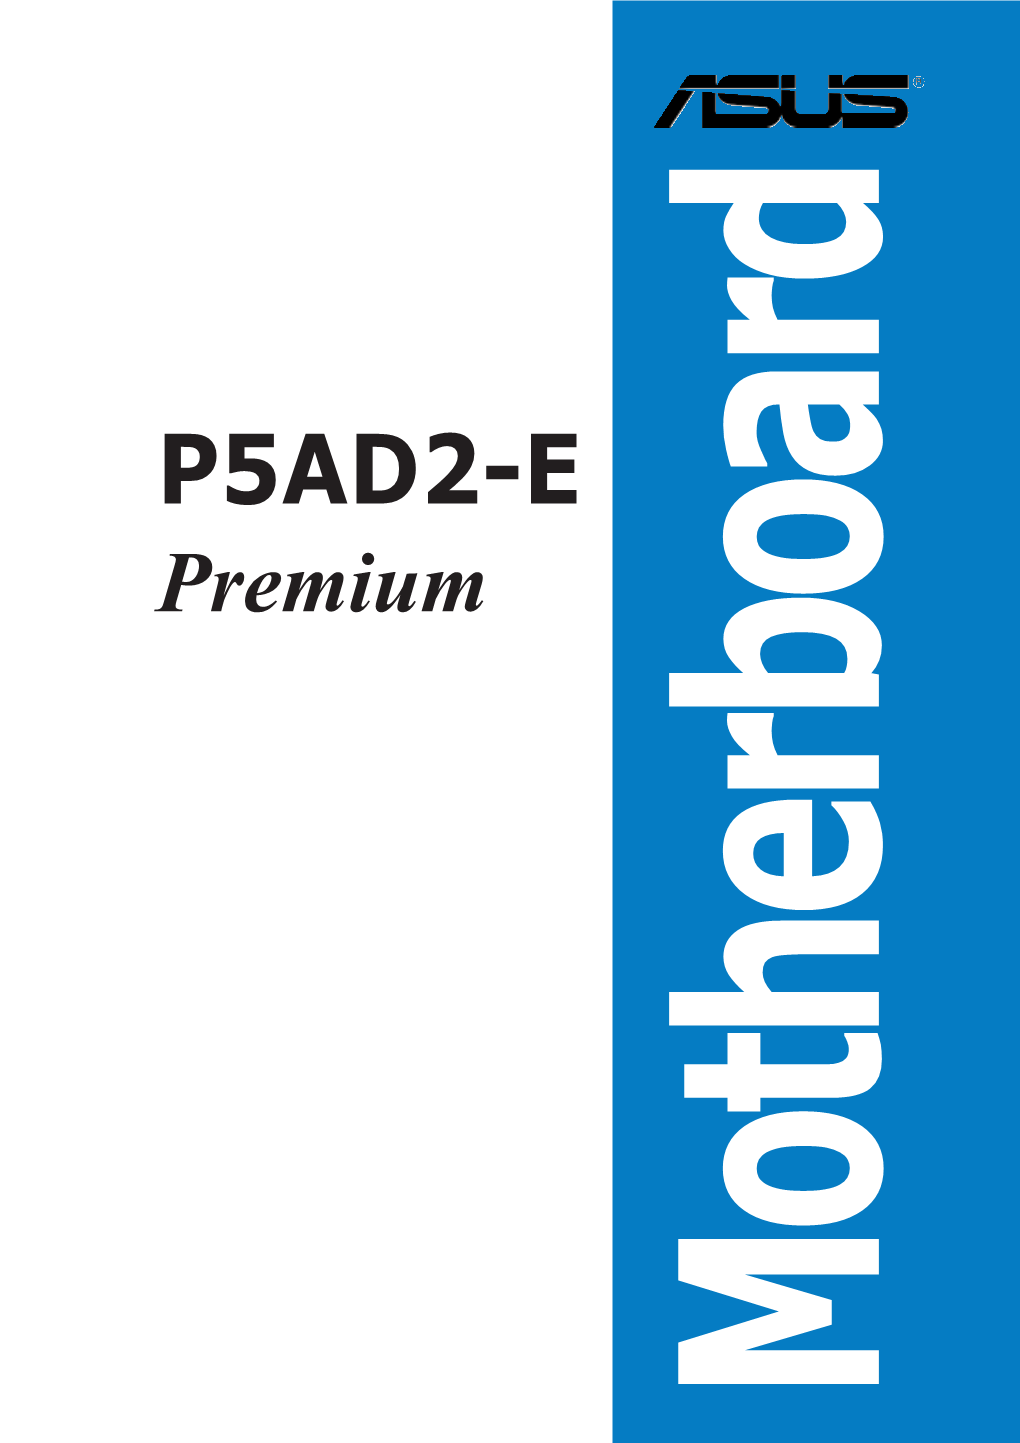 P5AD2-E Premium